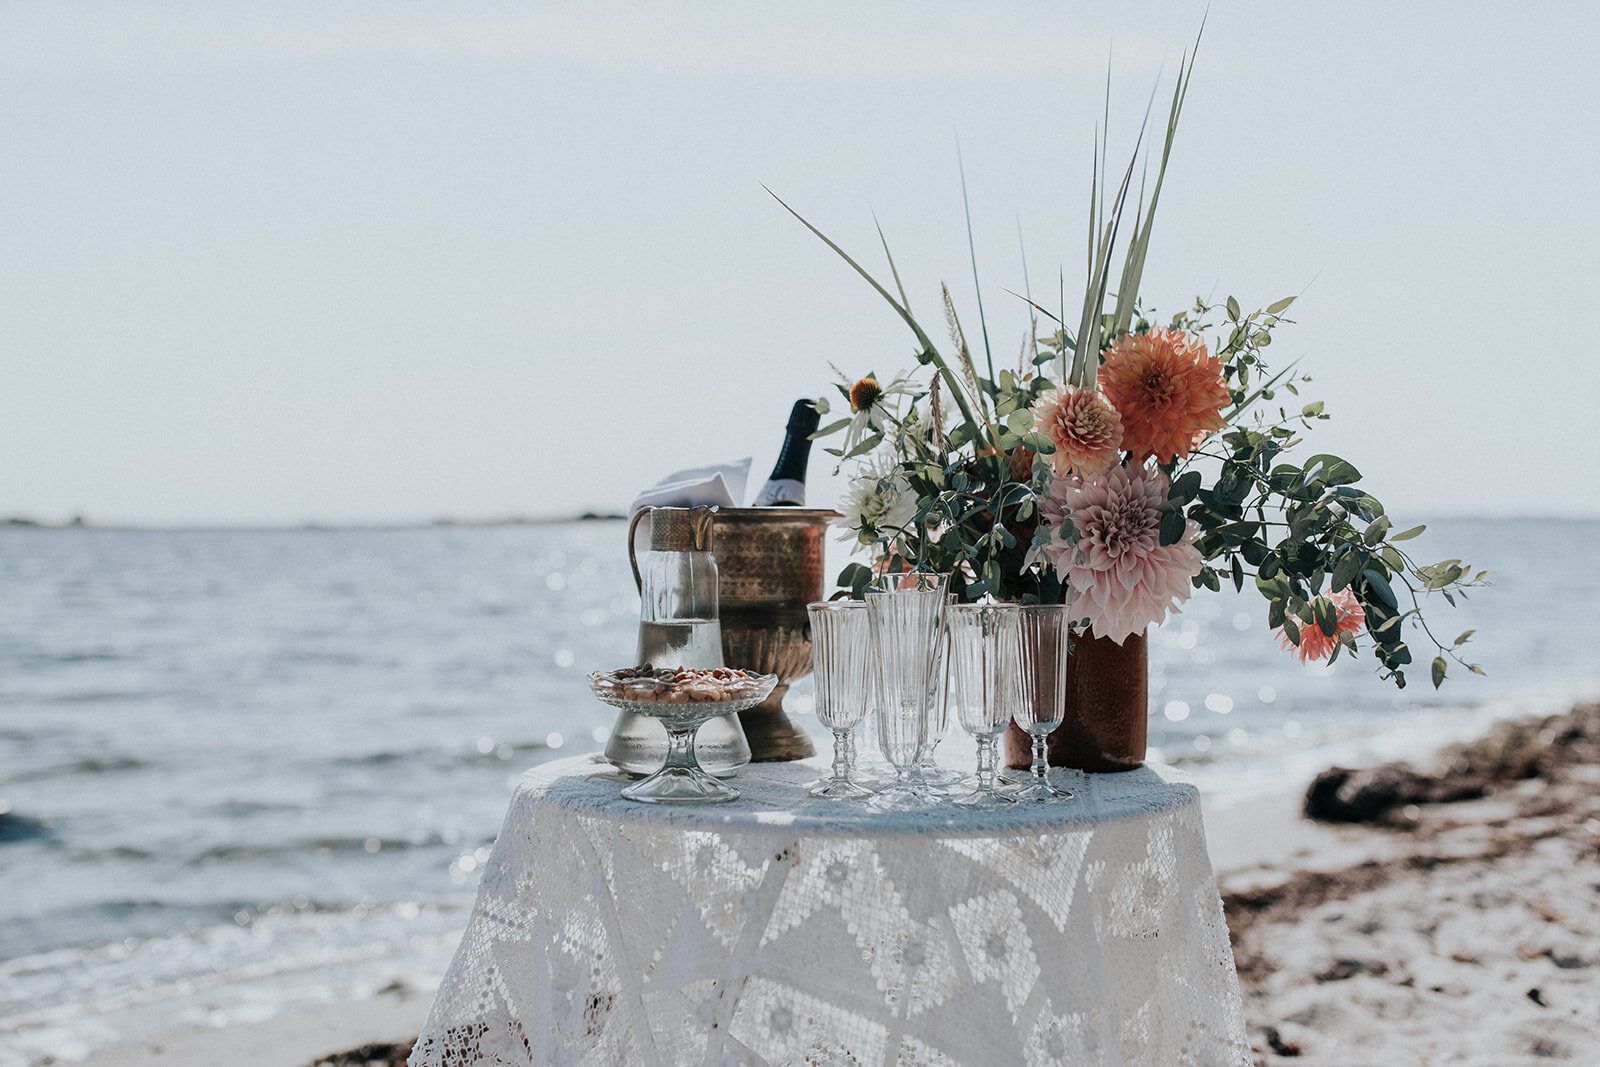 beachside wedding setup - Aero Island, Denmark - Wedding planned and coordinated by Danish Island Weddings - Full service wedding planners